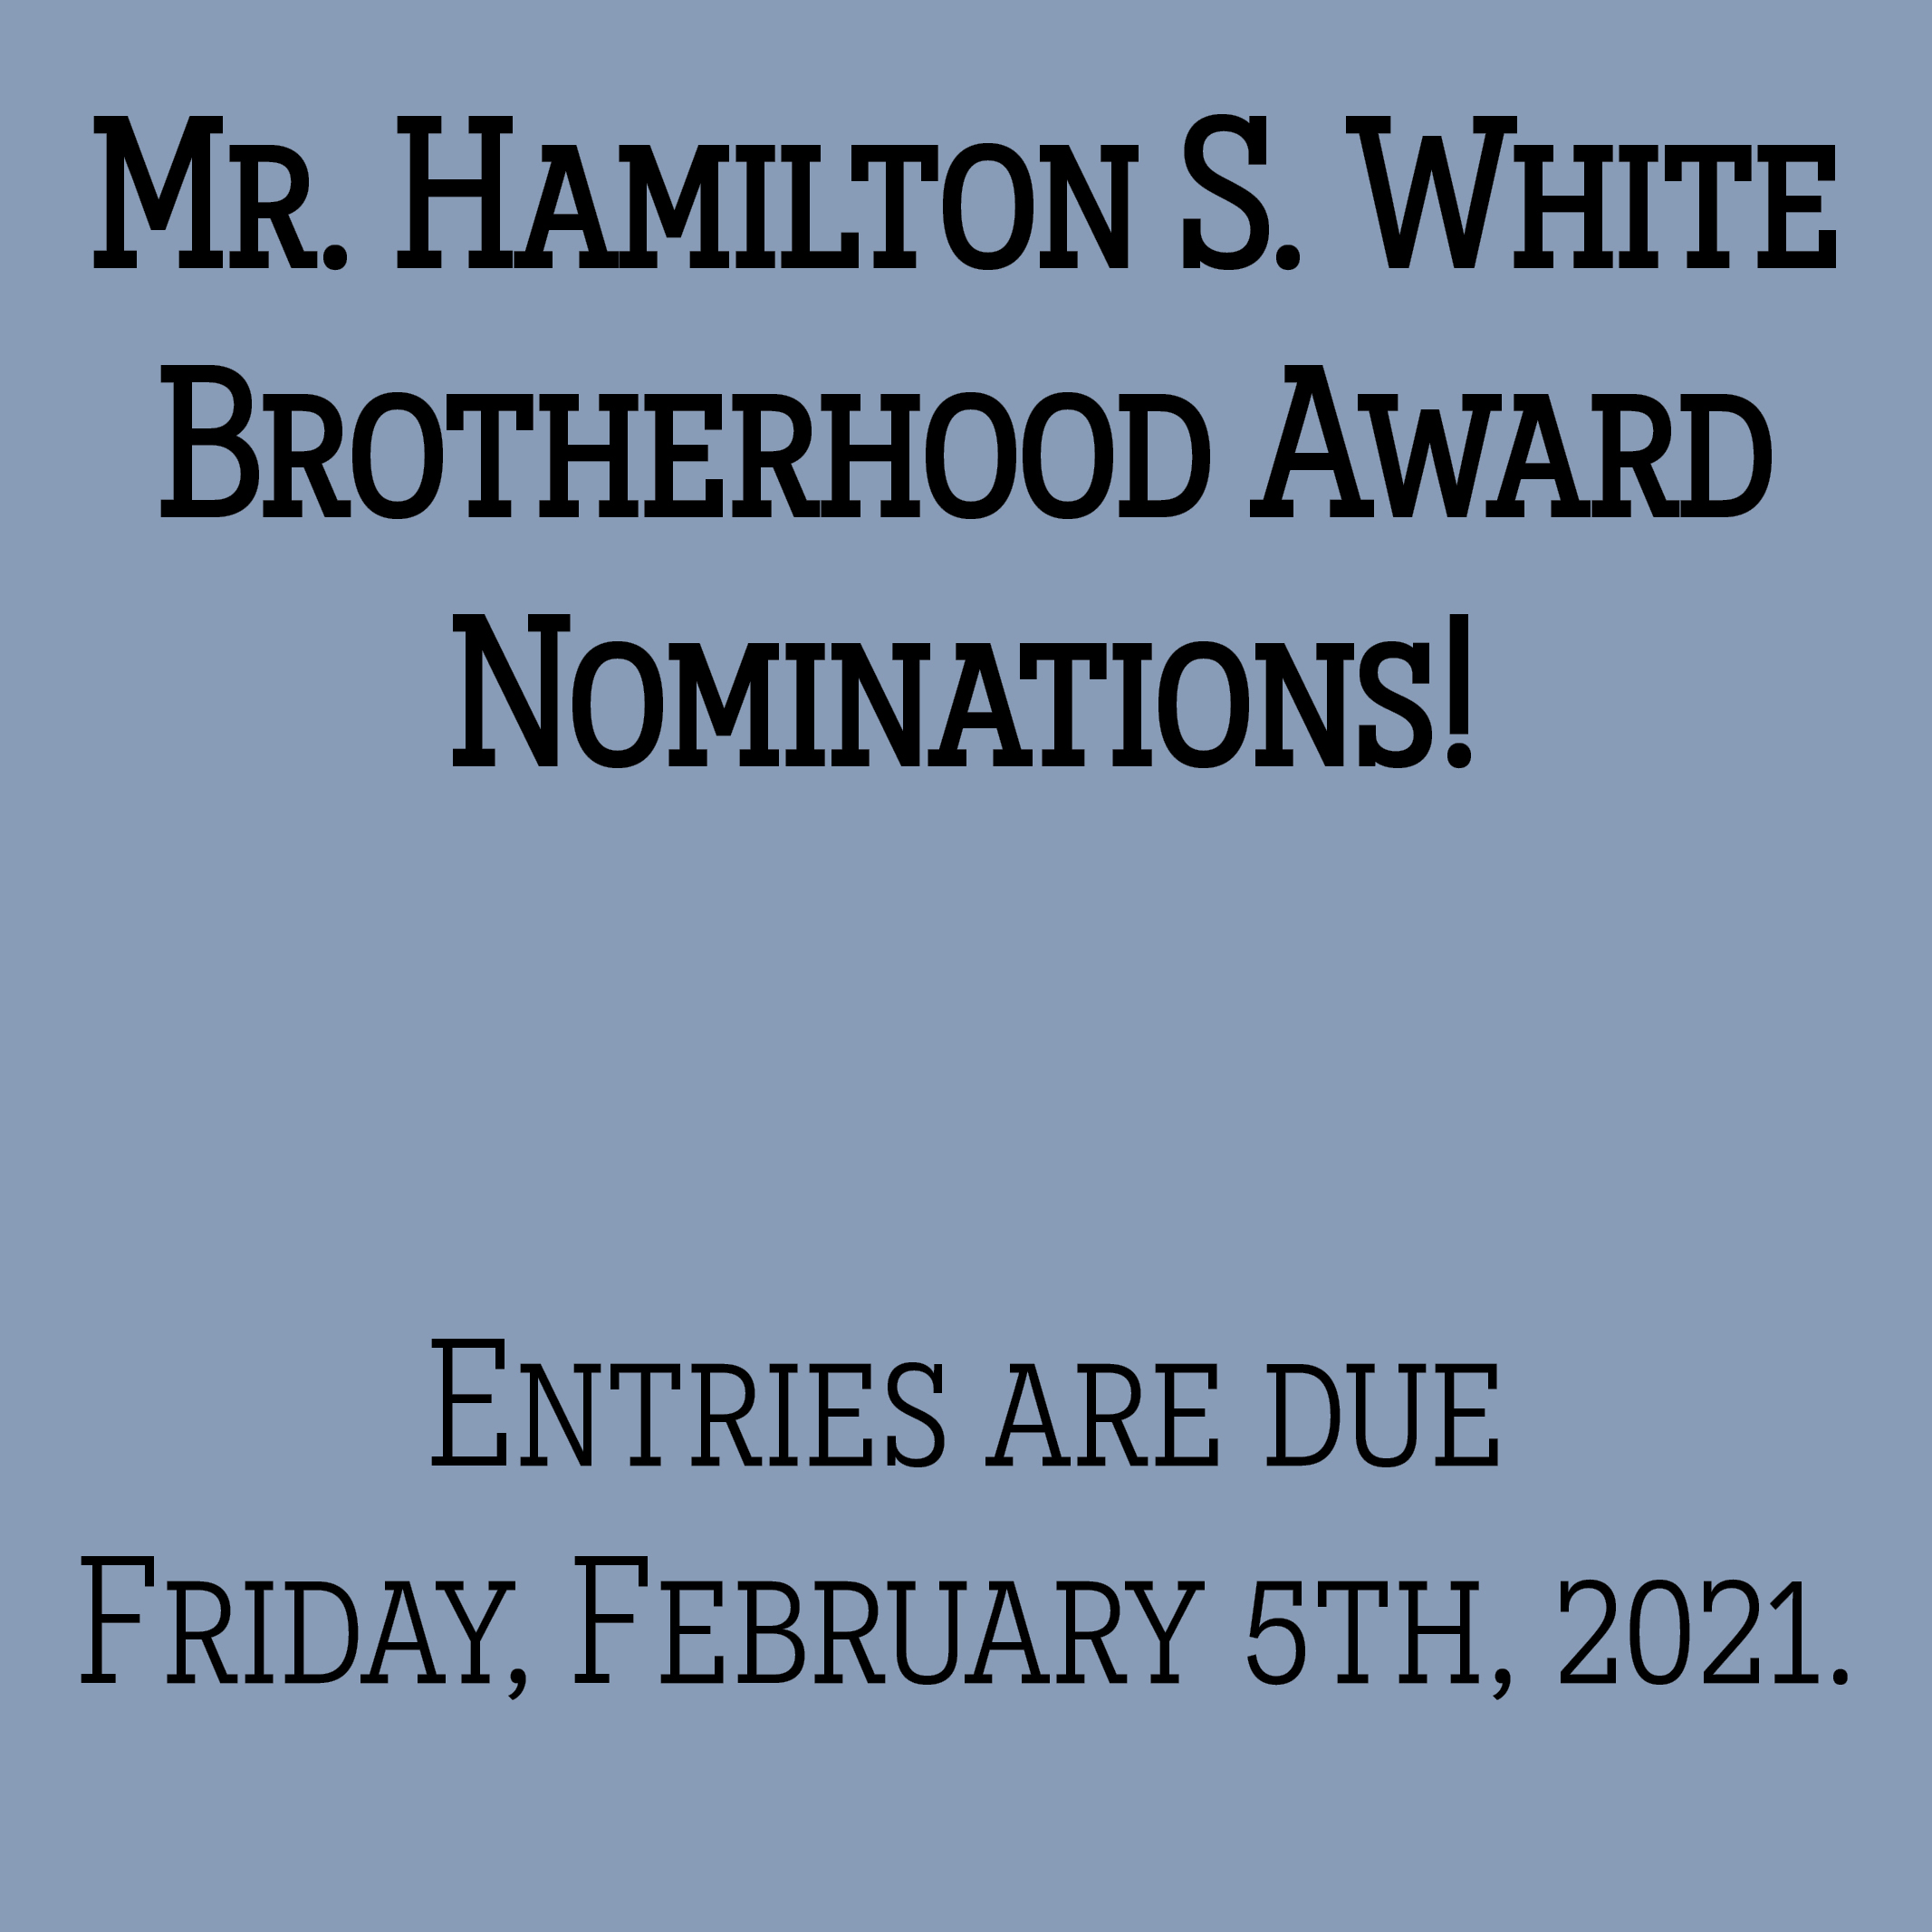 Mr. Hamilton S. White Brotherhood Award